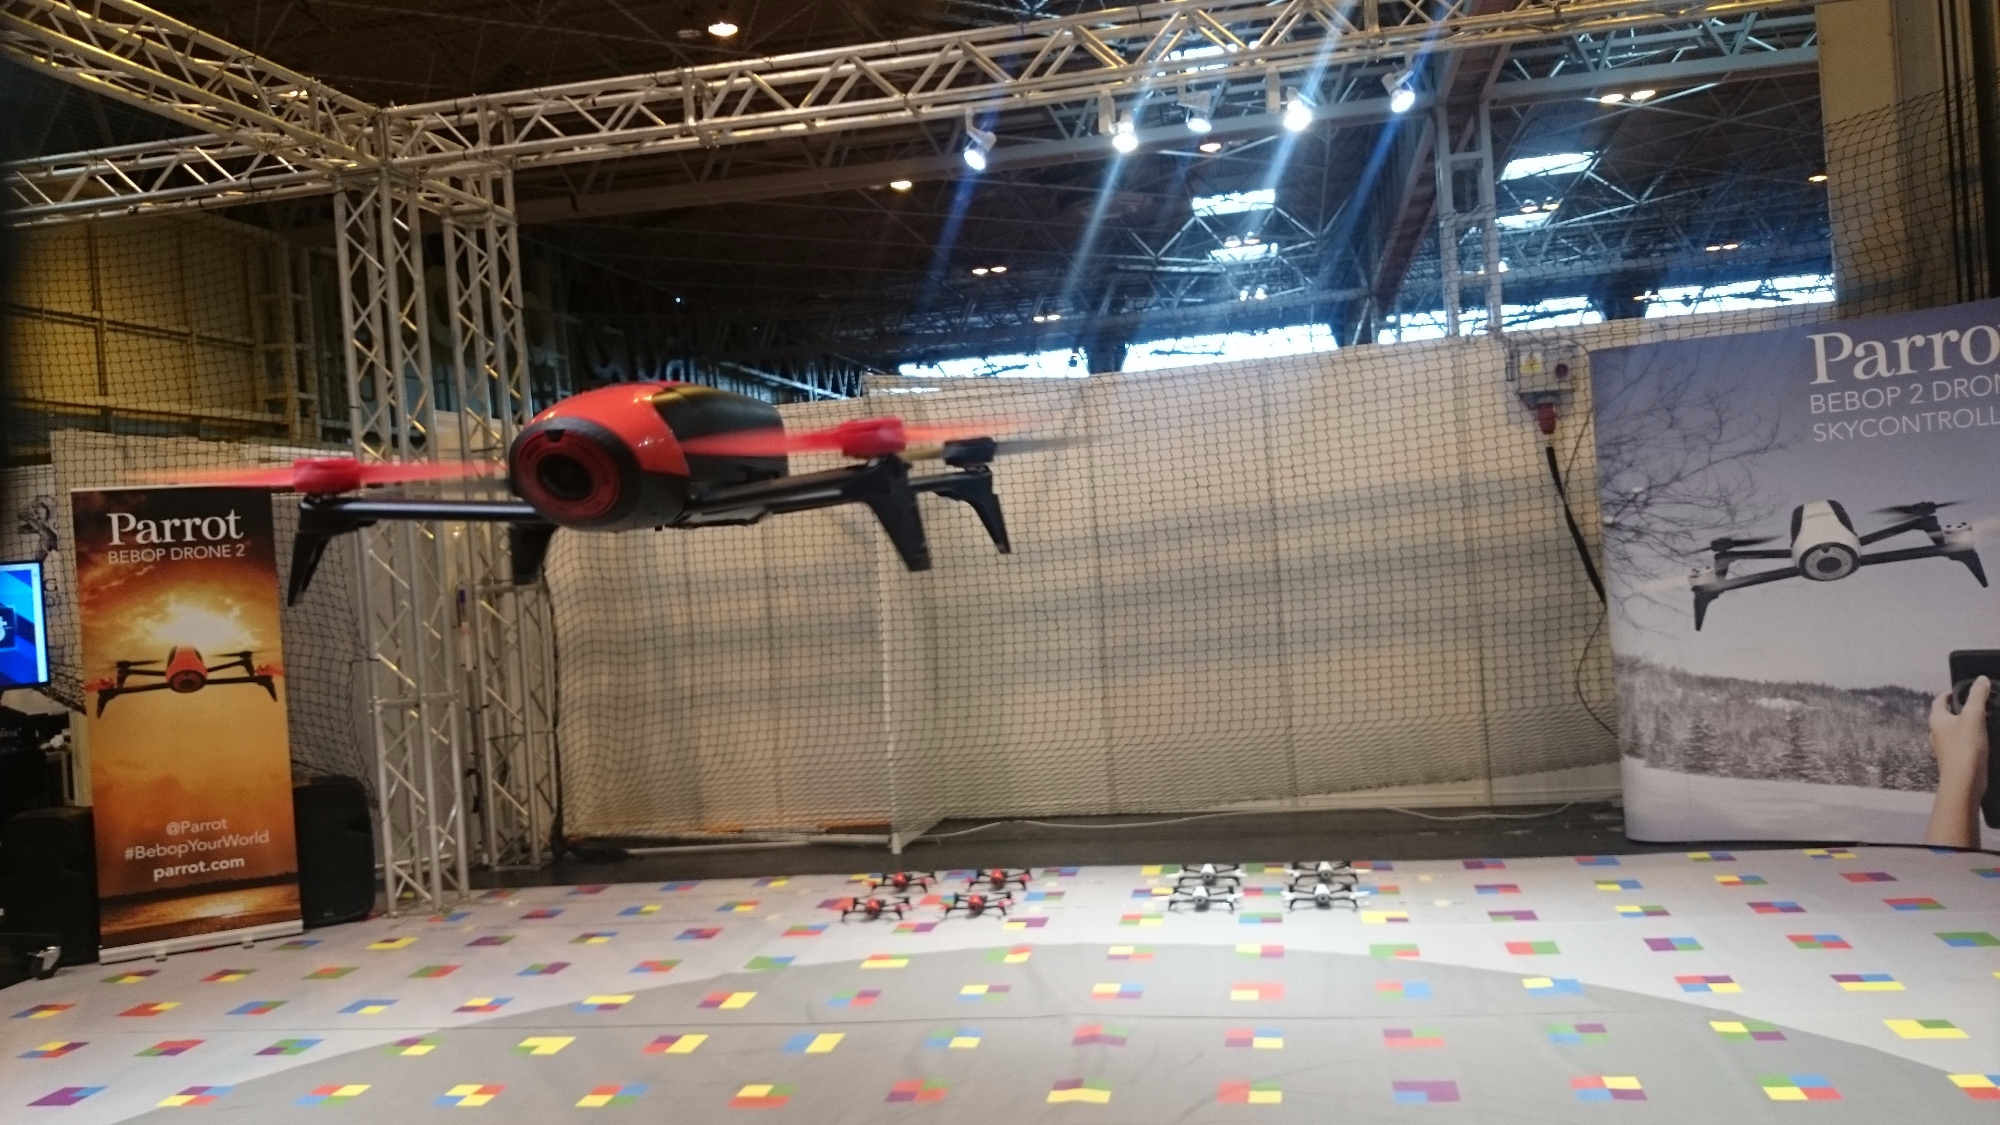 gadget show - drone